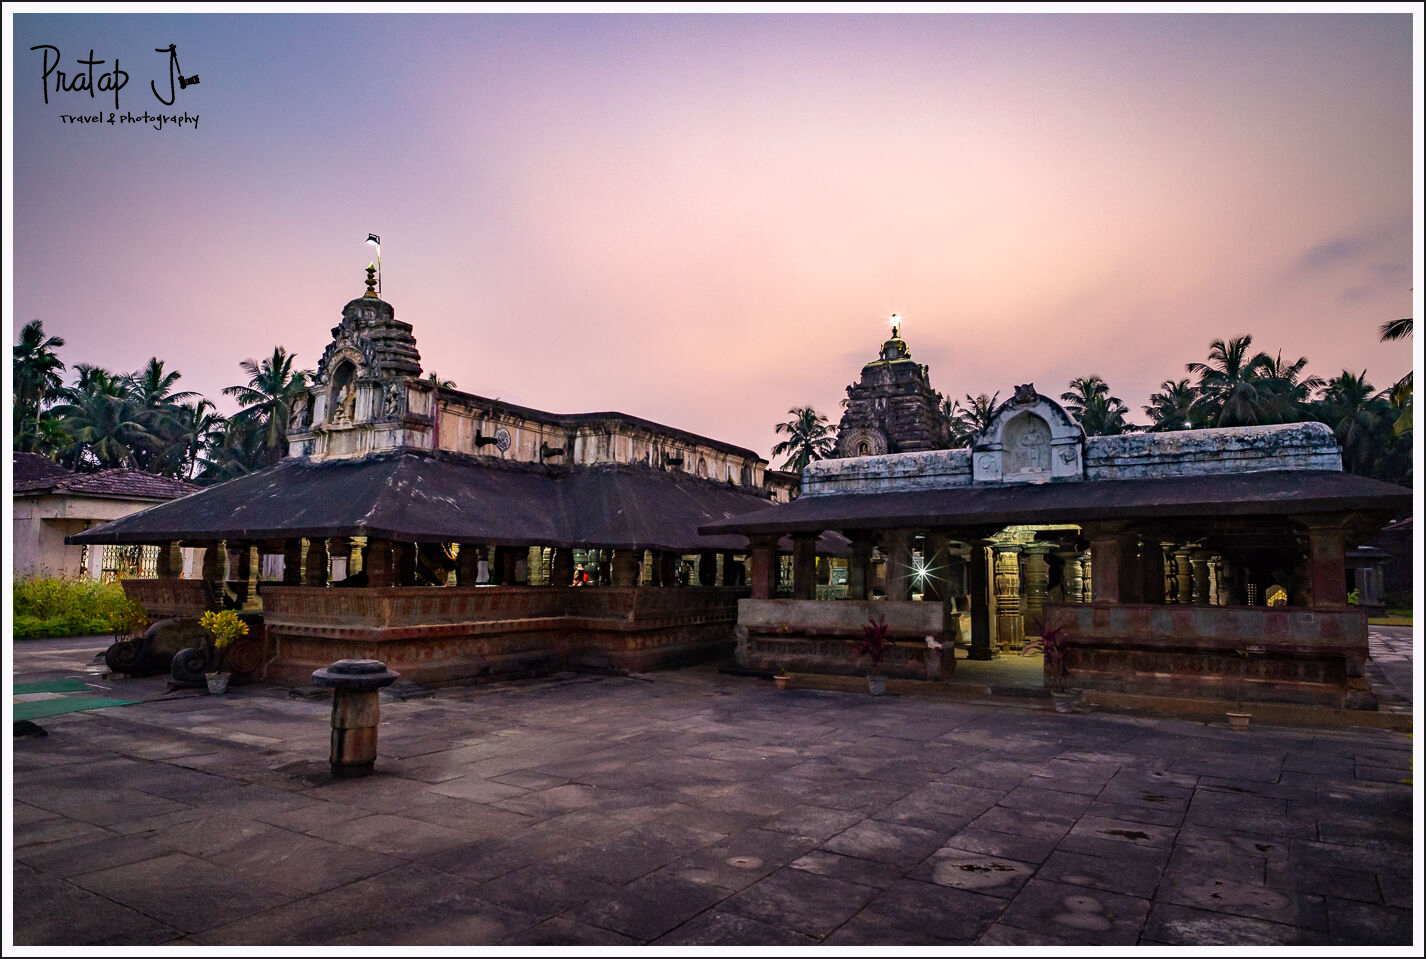 Madhukeshwara Temple in Banavasi